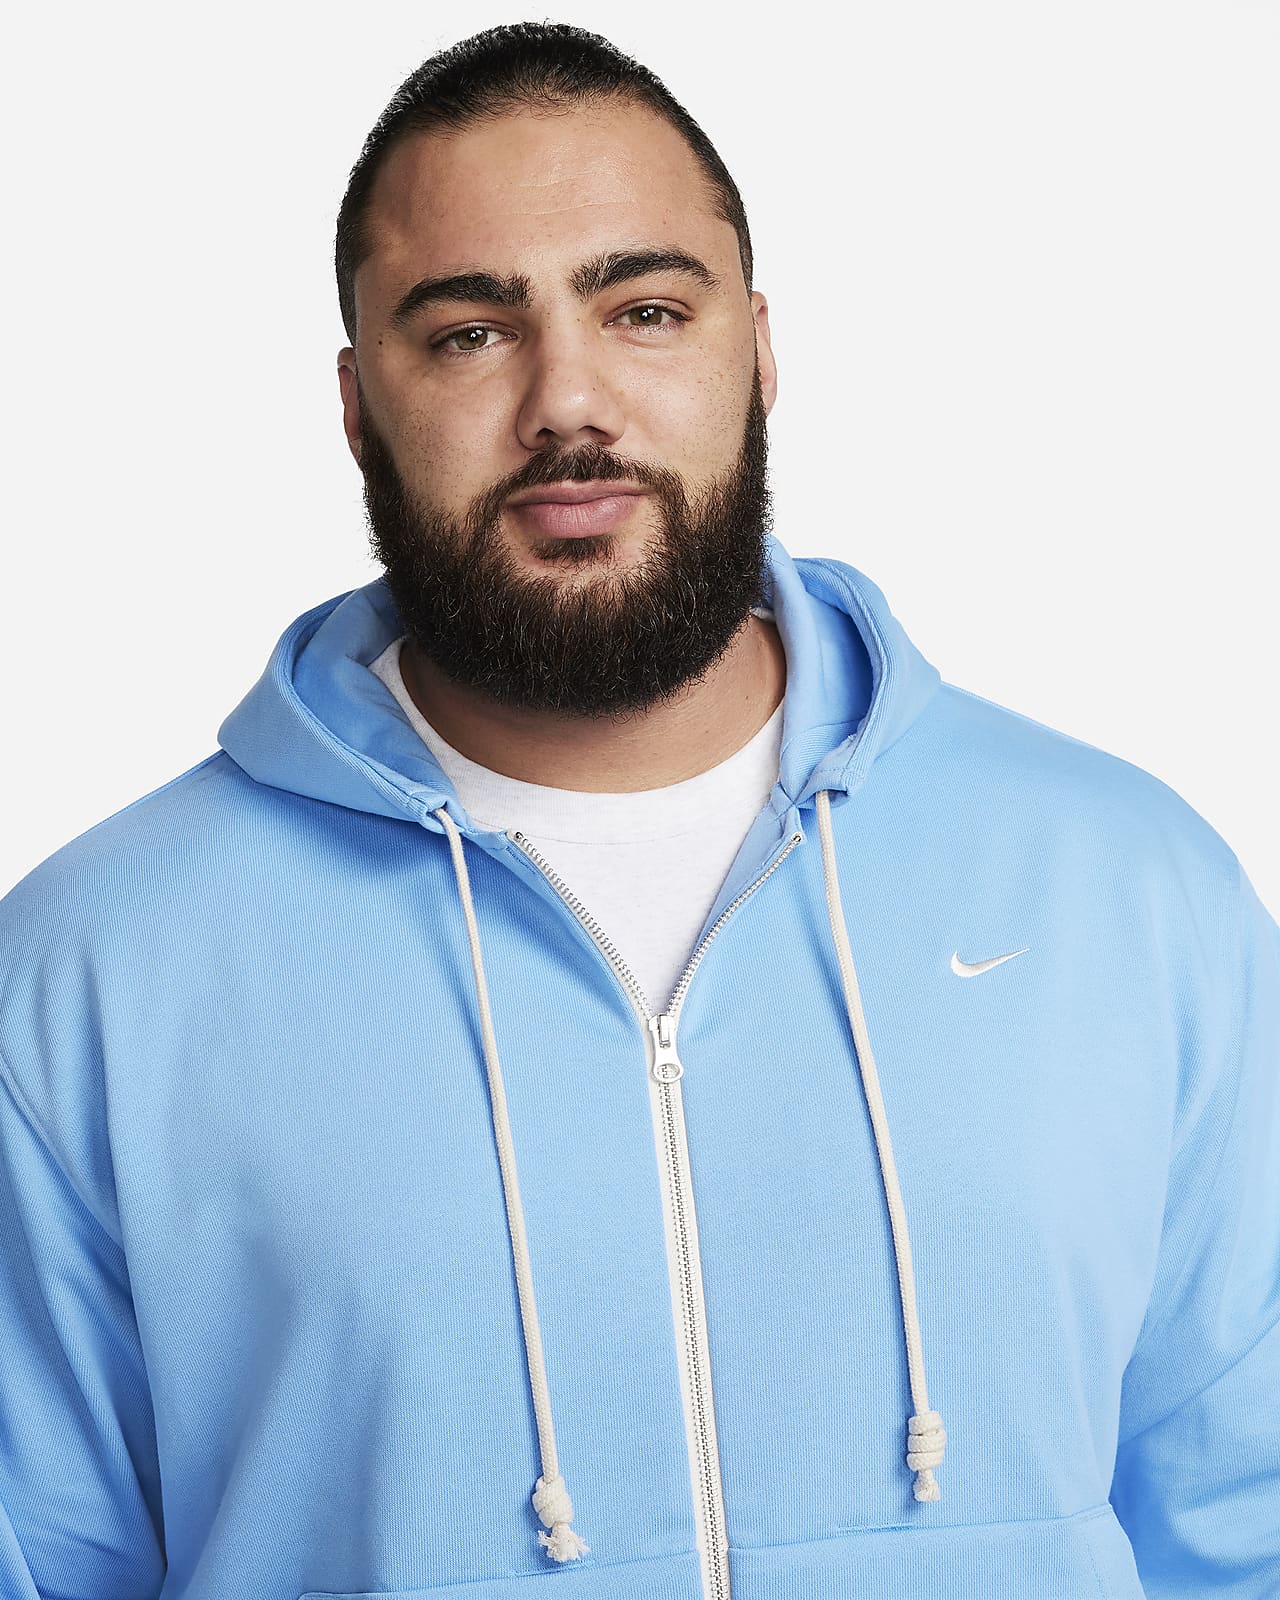 Nike Dri-Fit Standard Issue Hoodie - Men's - GBNY